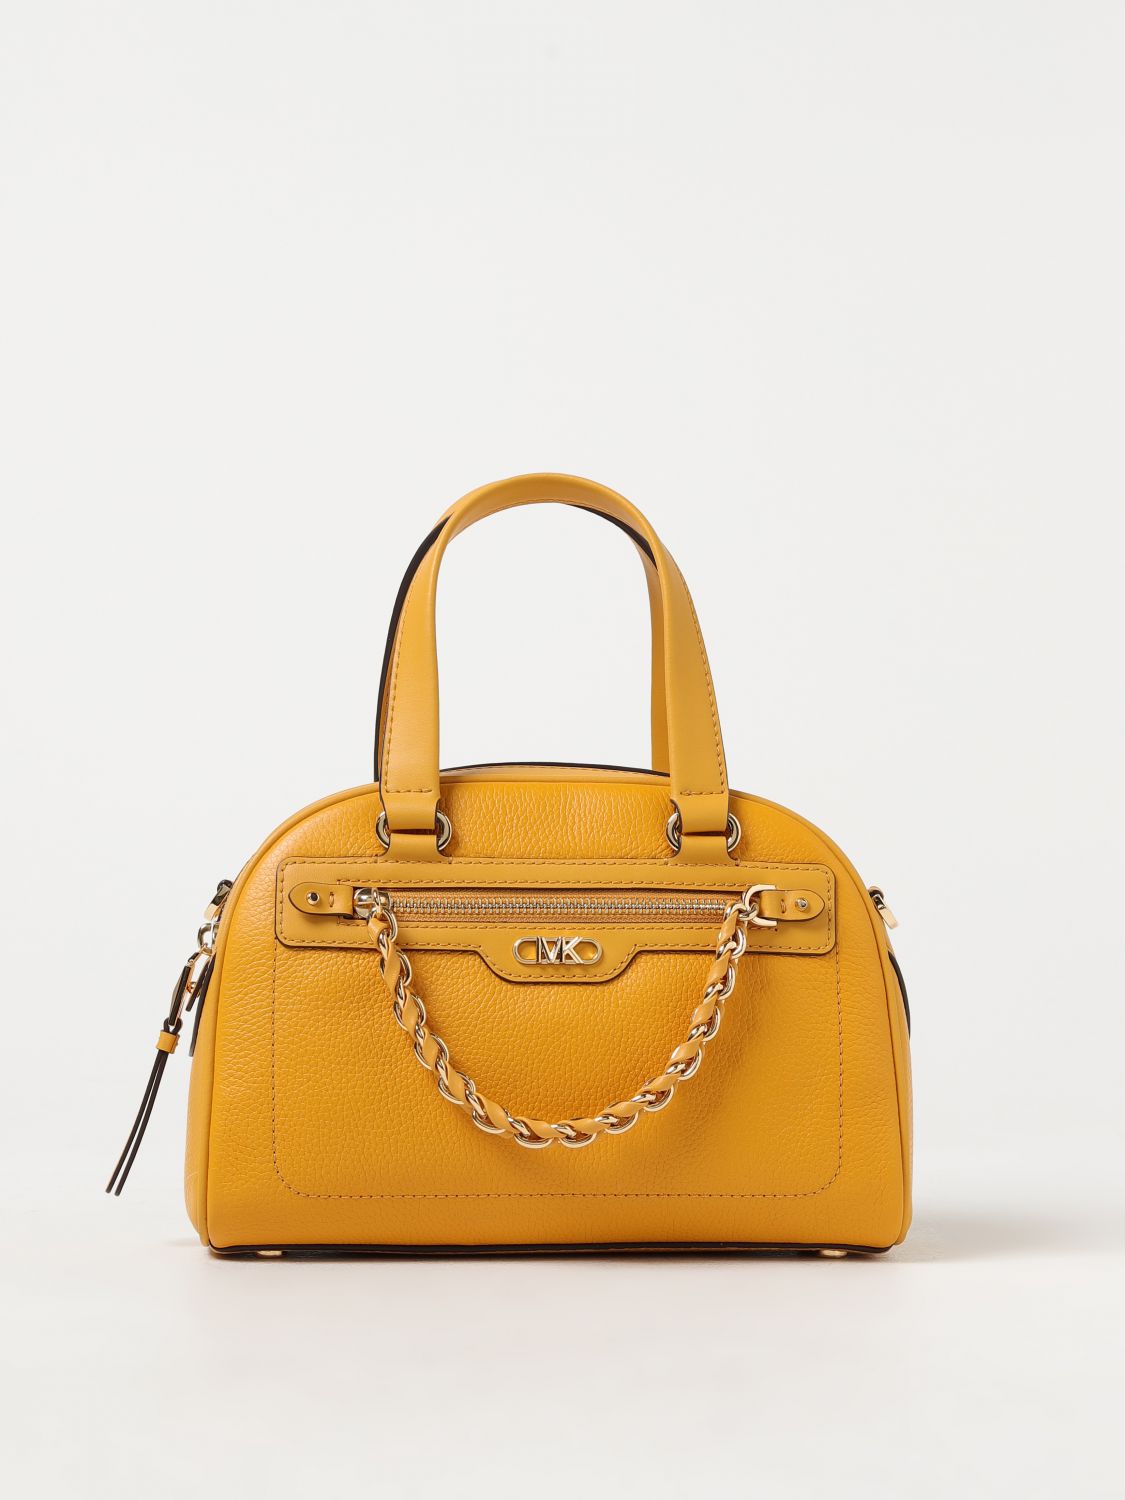 Michael Kors Light Yellow/tan Purse | Yellow purses, Black leather bags,  Black leather handbags